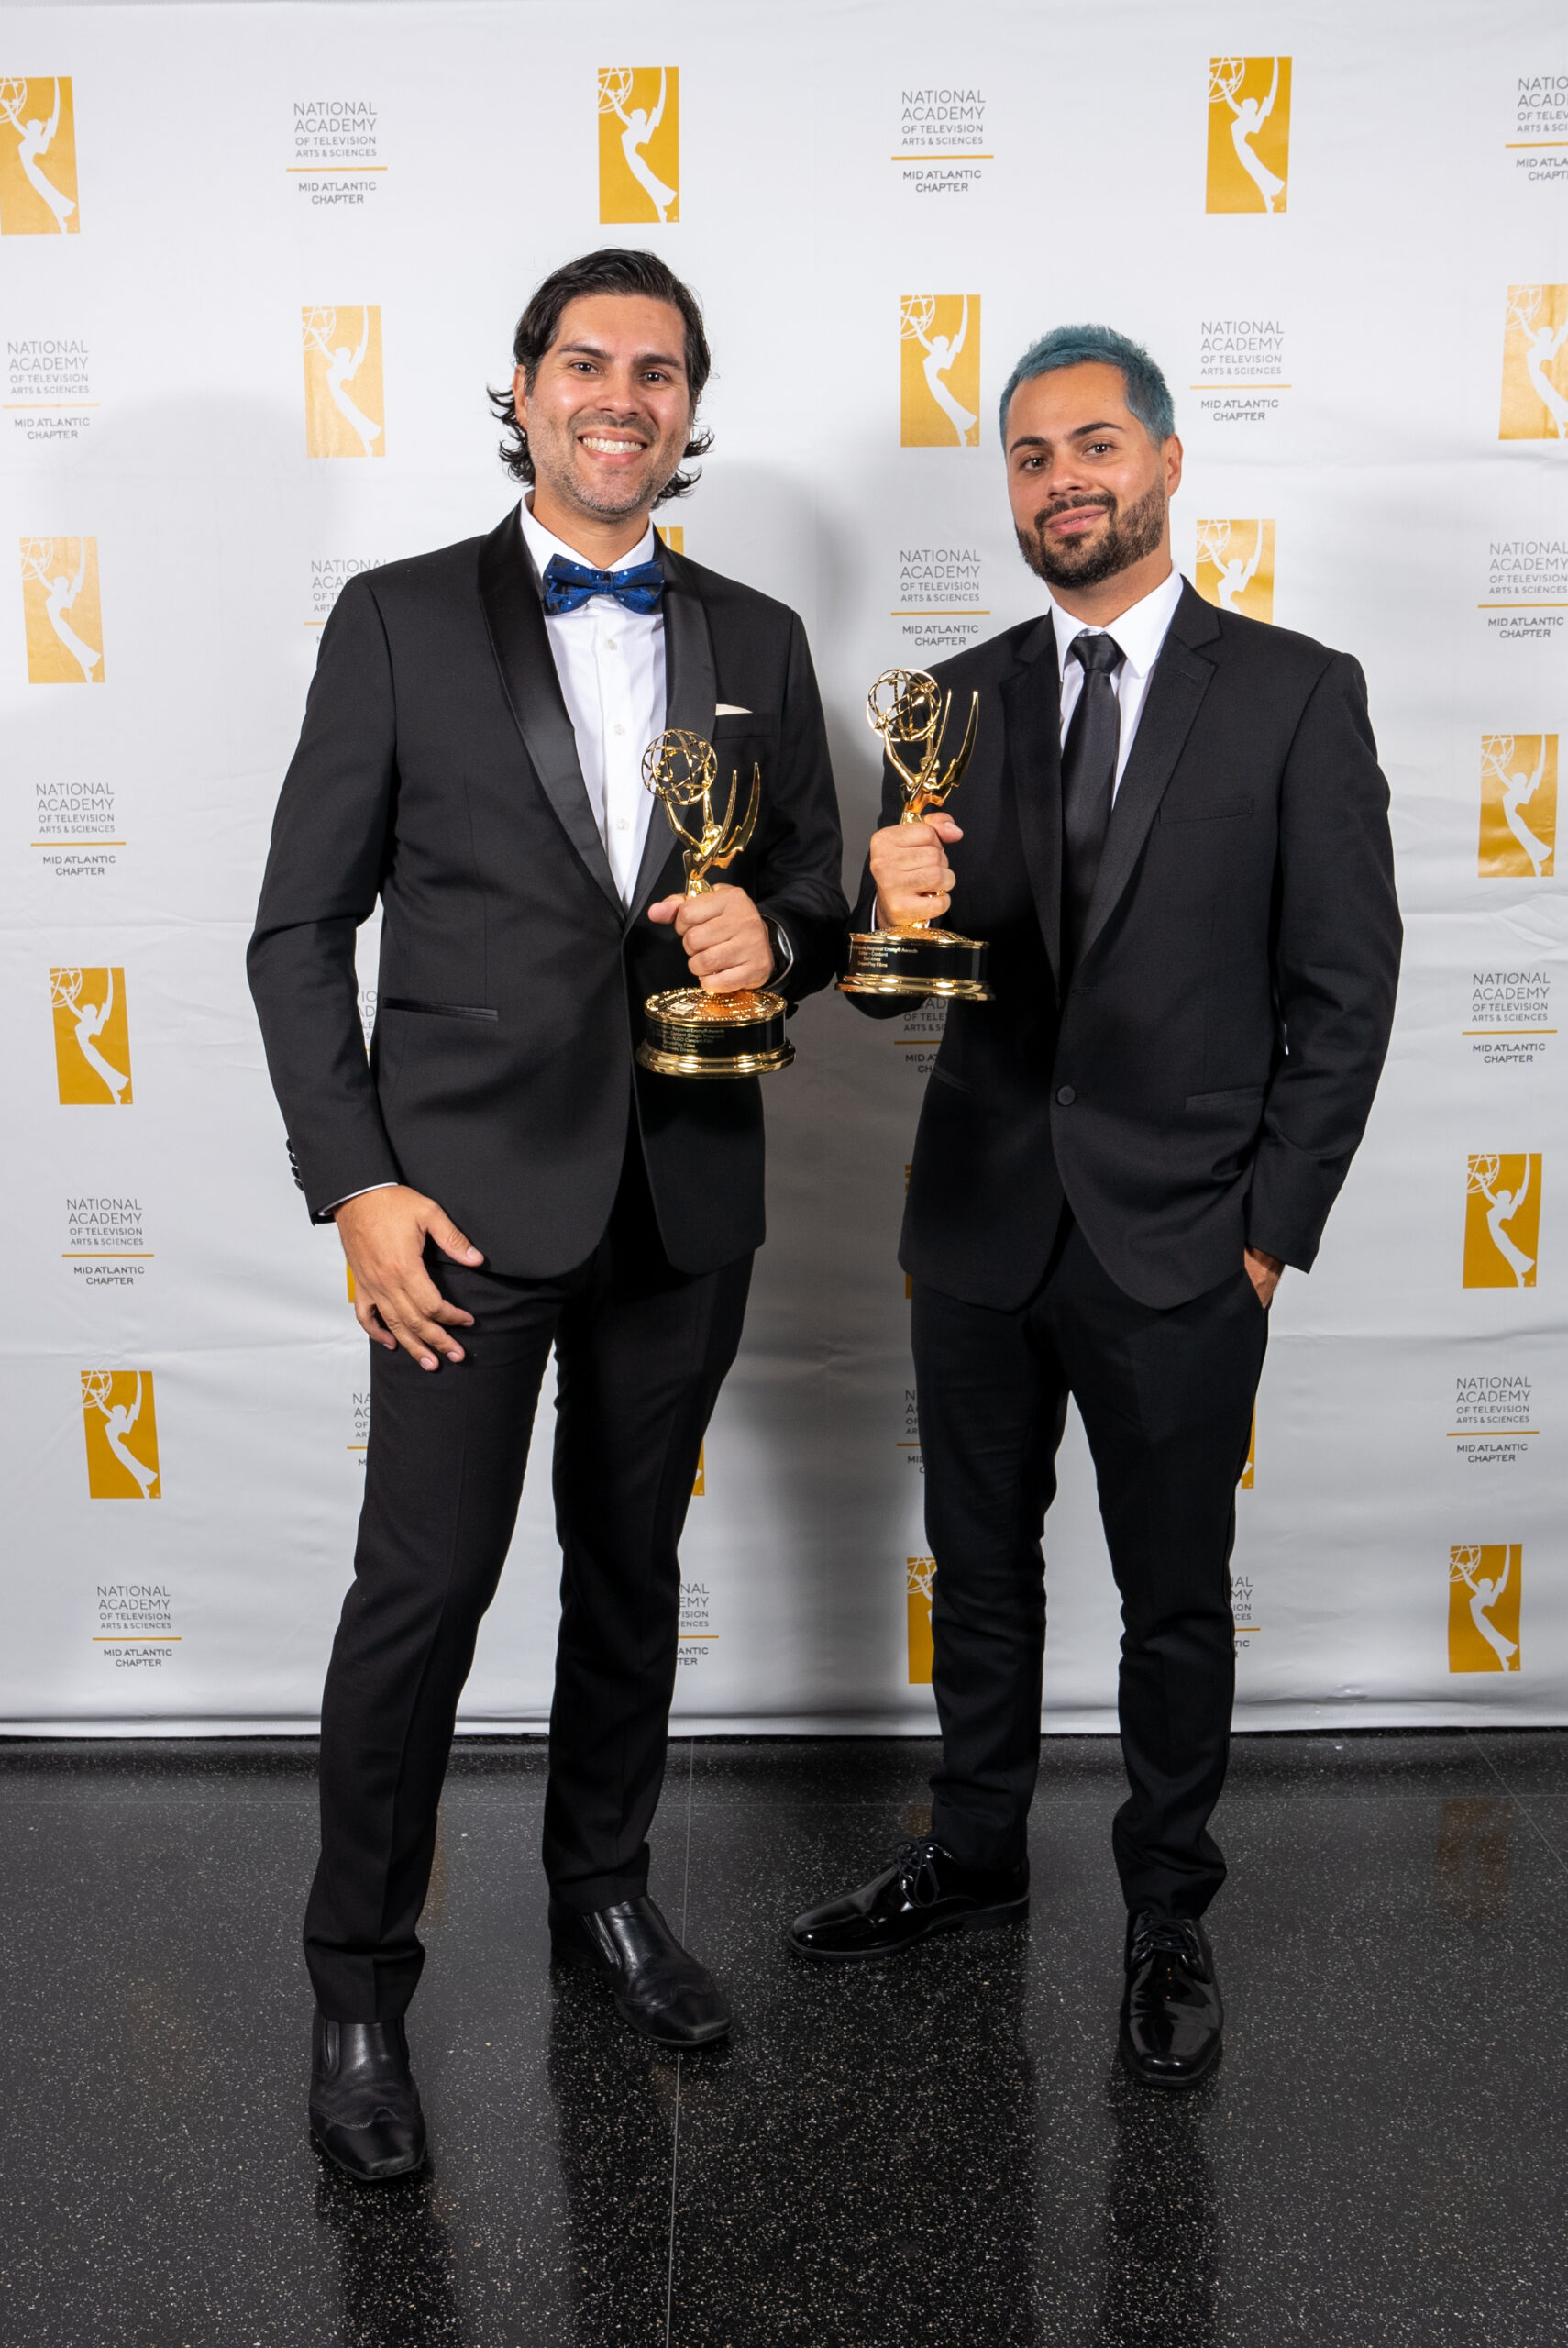 Igor Alves and Yuri Alves with their Emmy Awards at the awards gala.